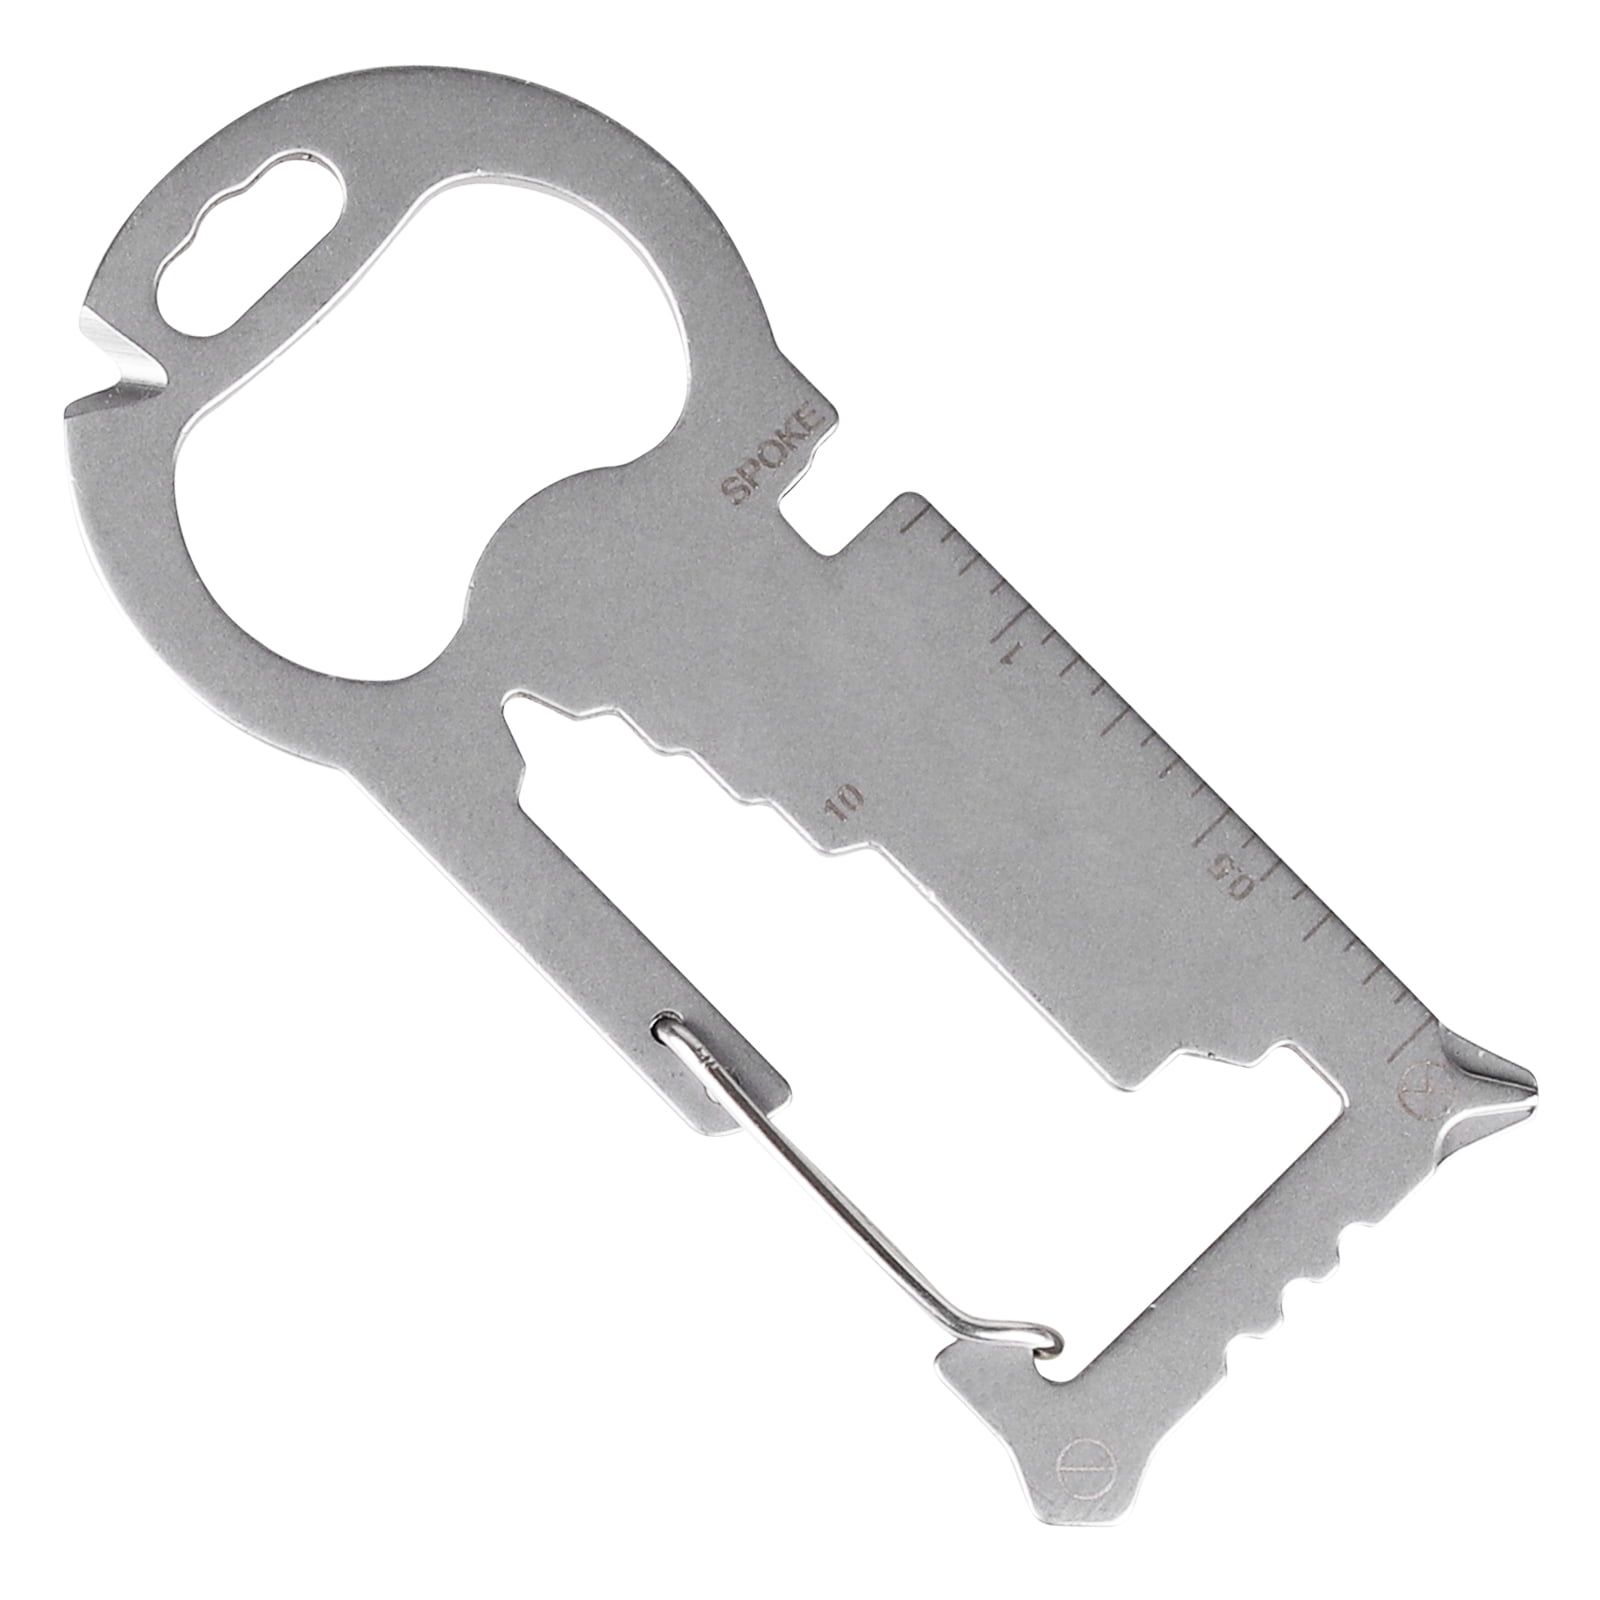 5 In 1 Mini Pocket Survival Multi Tool Tactical EDC Key Chain Bottle Opener